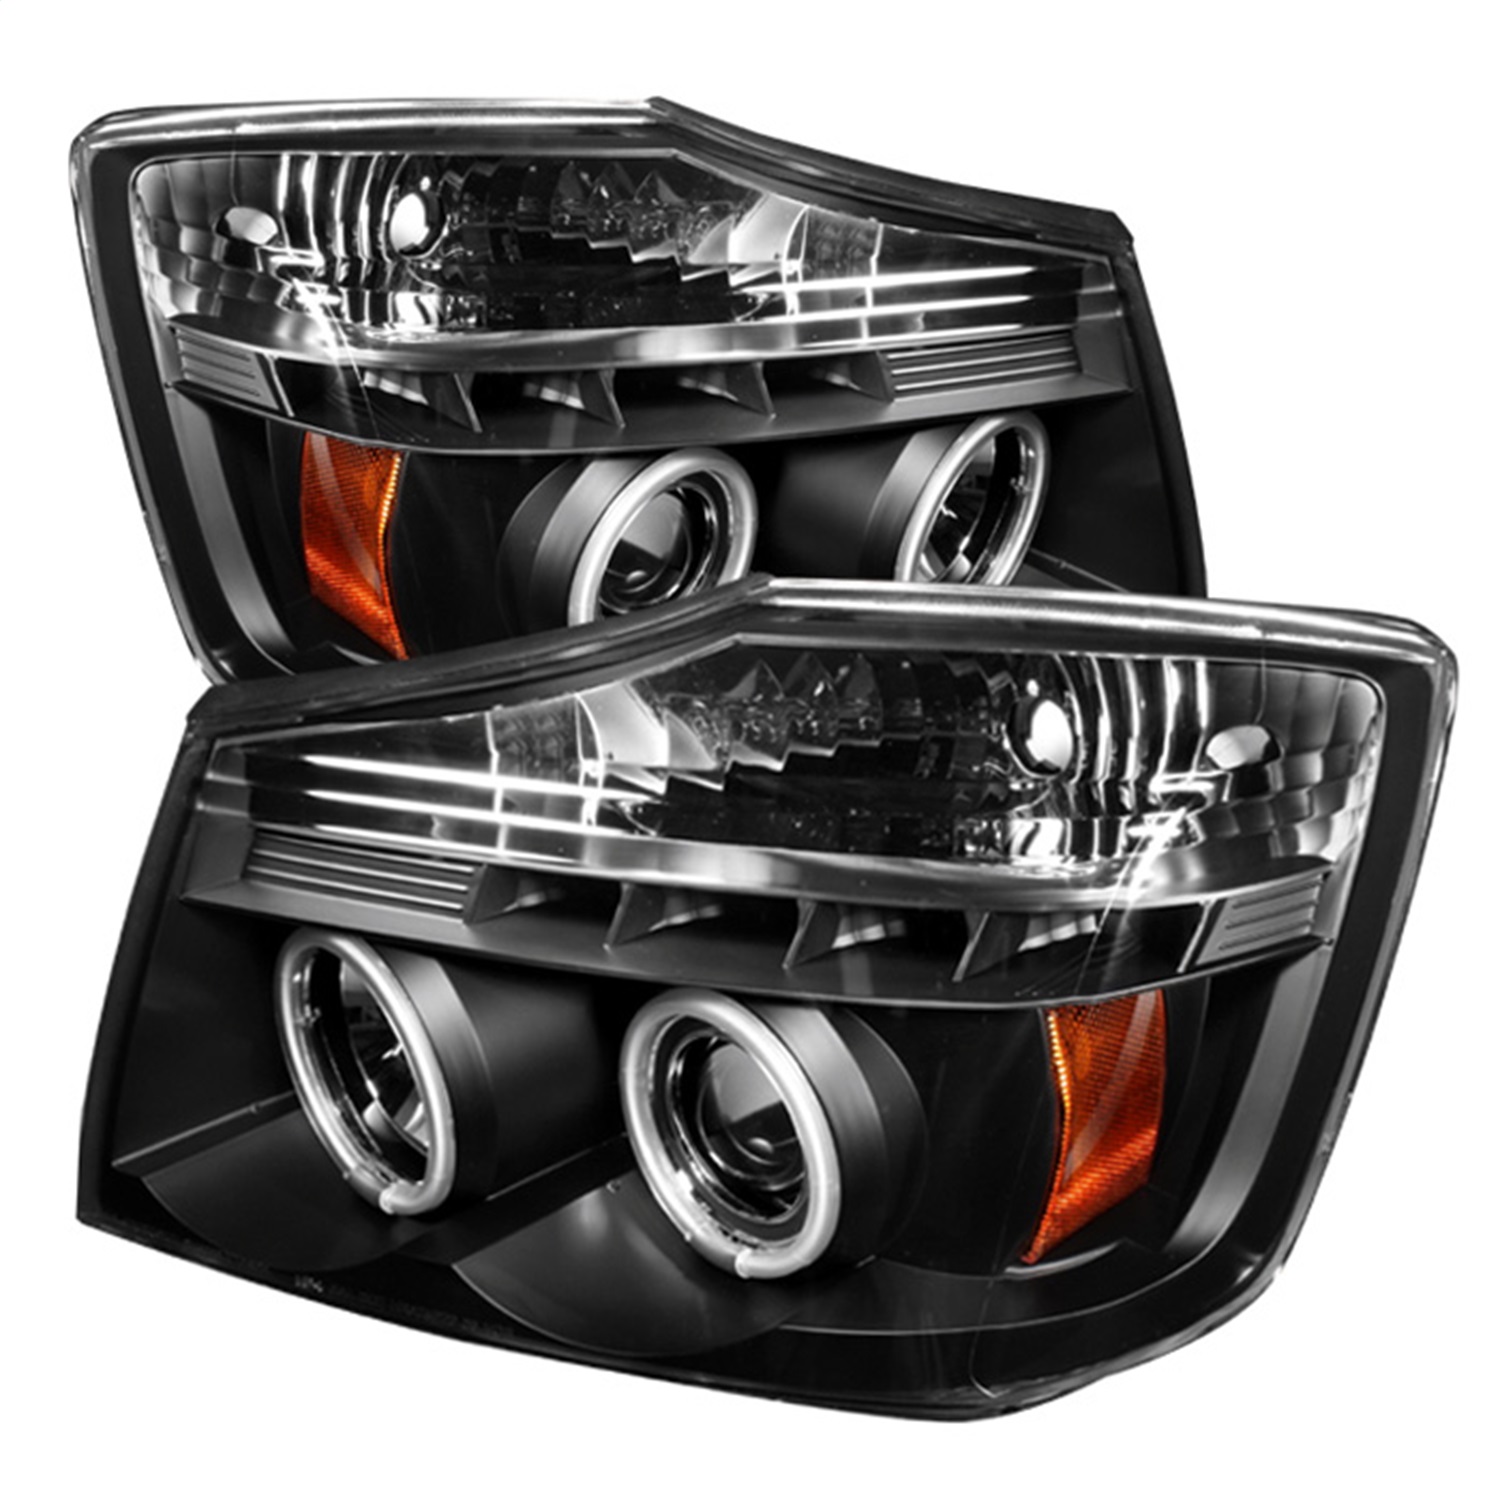 Spyder Auto 5030207 CCFL LED Projector Headlights